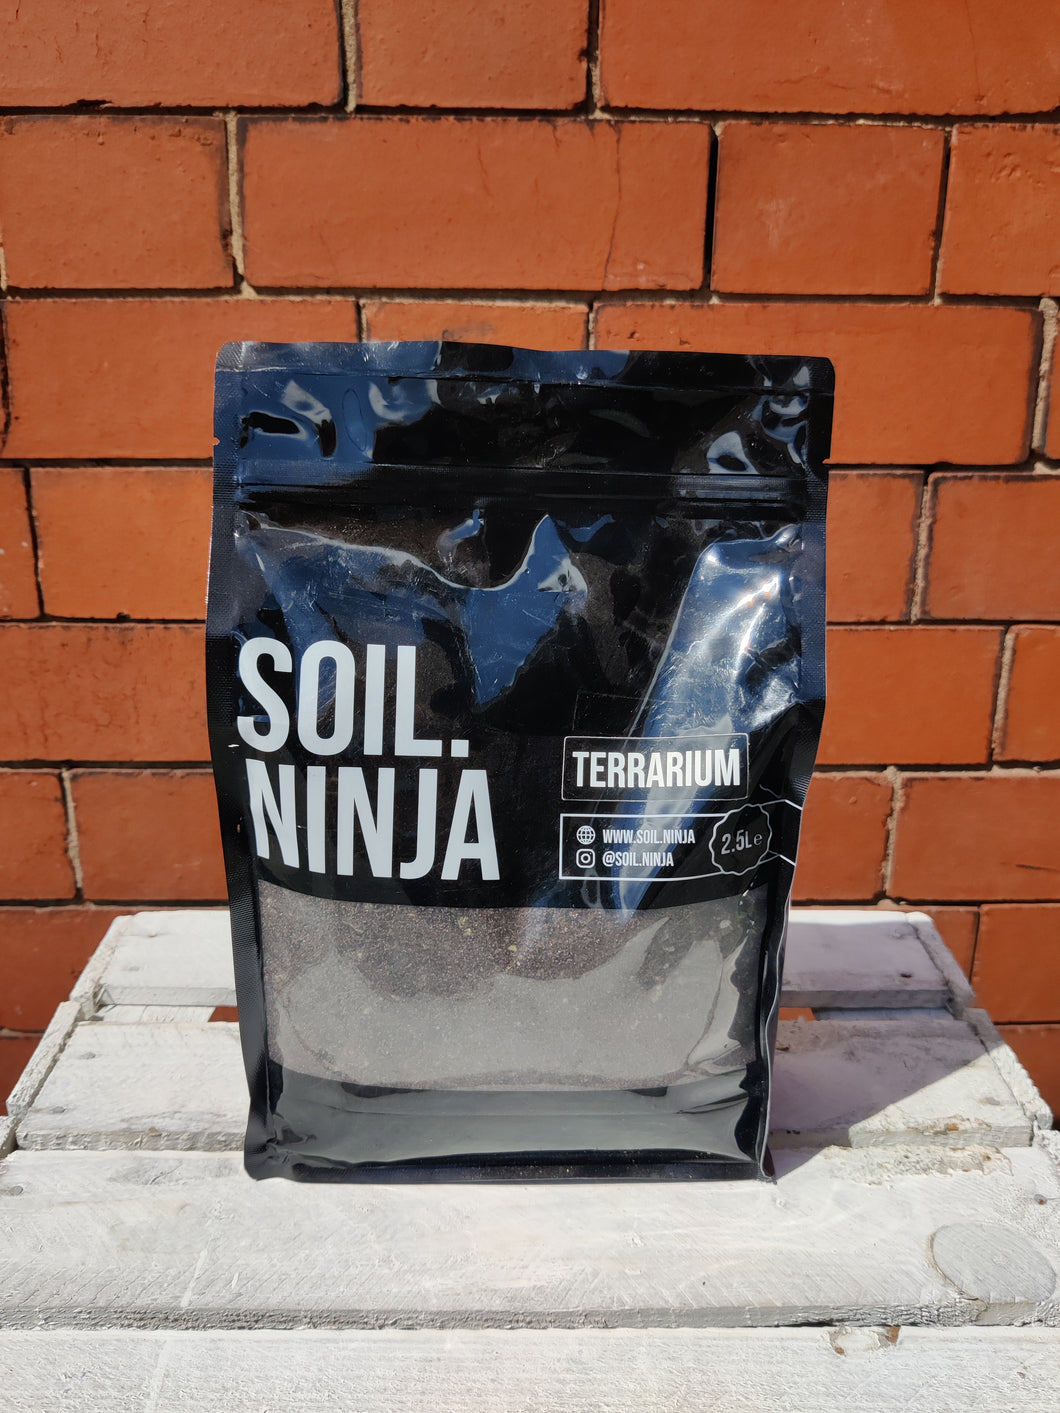 Terrarium 2.5L Soil. Ninja